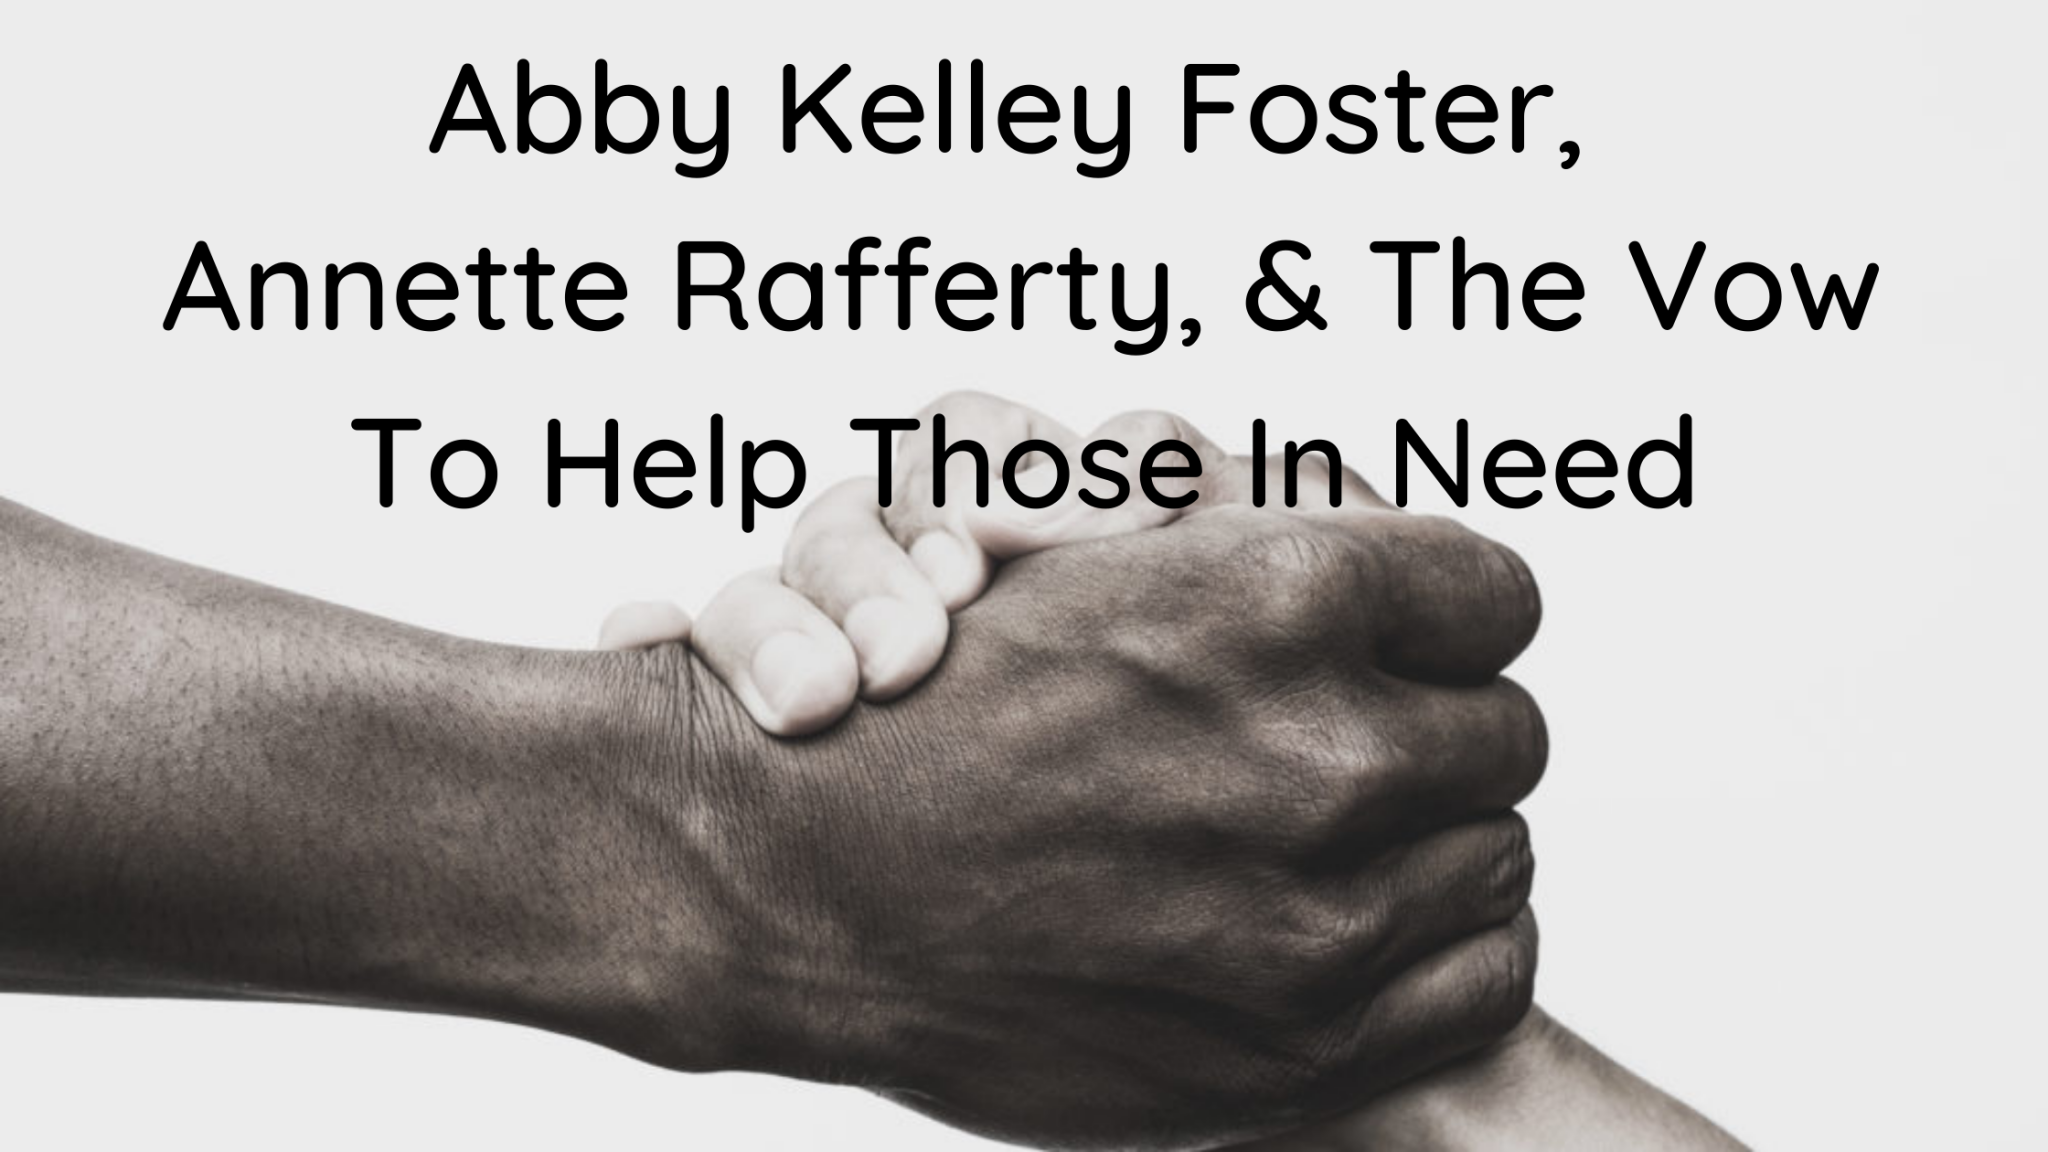 Foster, Abby Kelley